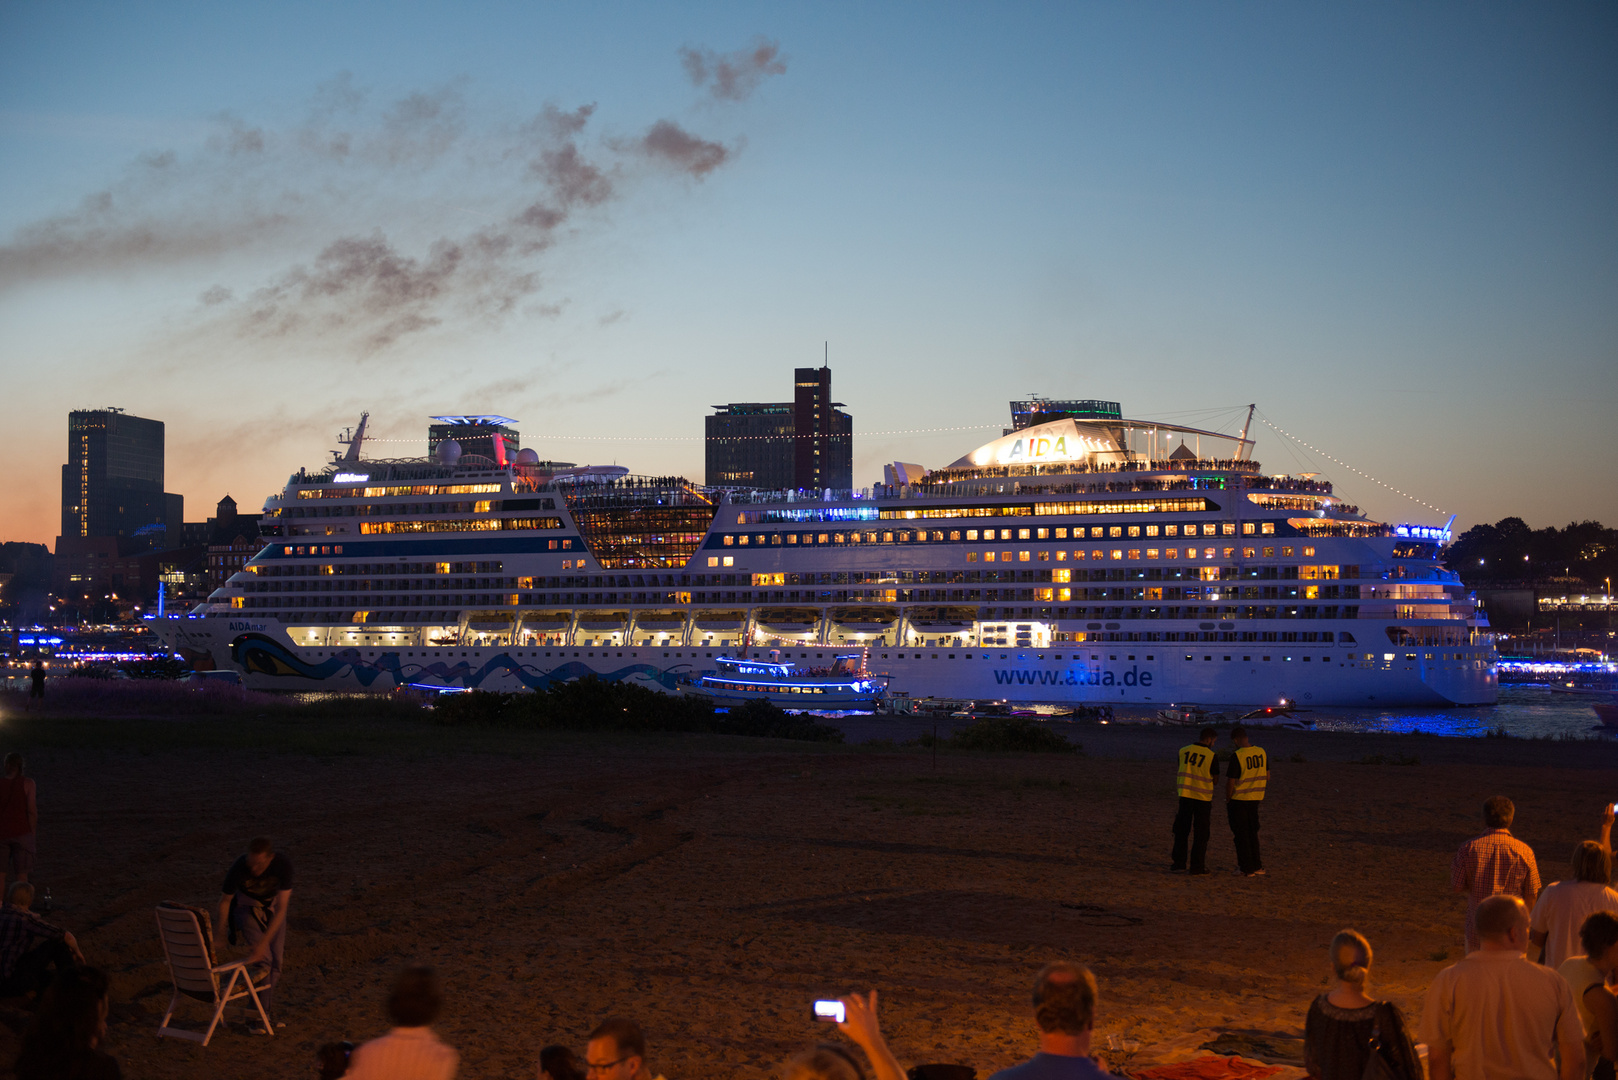 mv AIDAmar leaving Hamburg during Cruise Days 2012